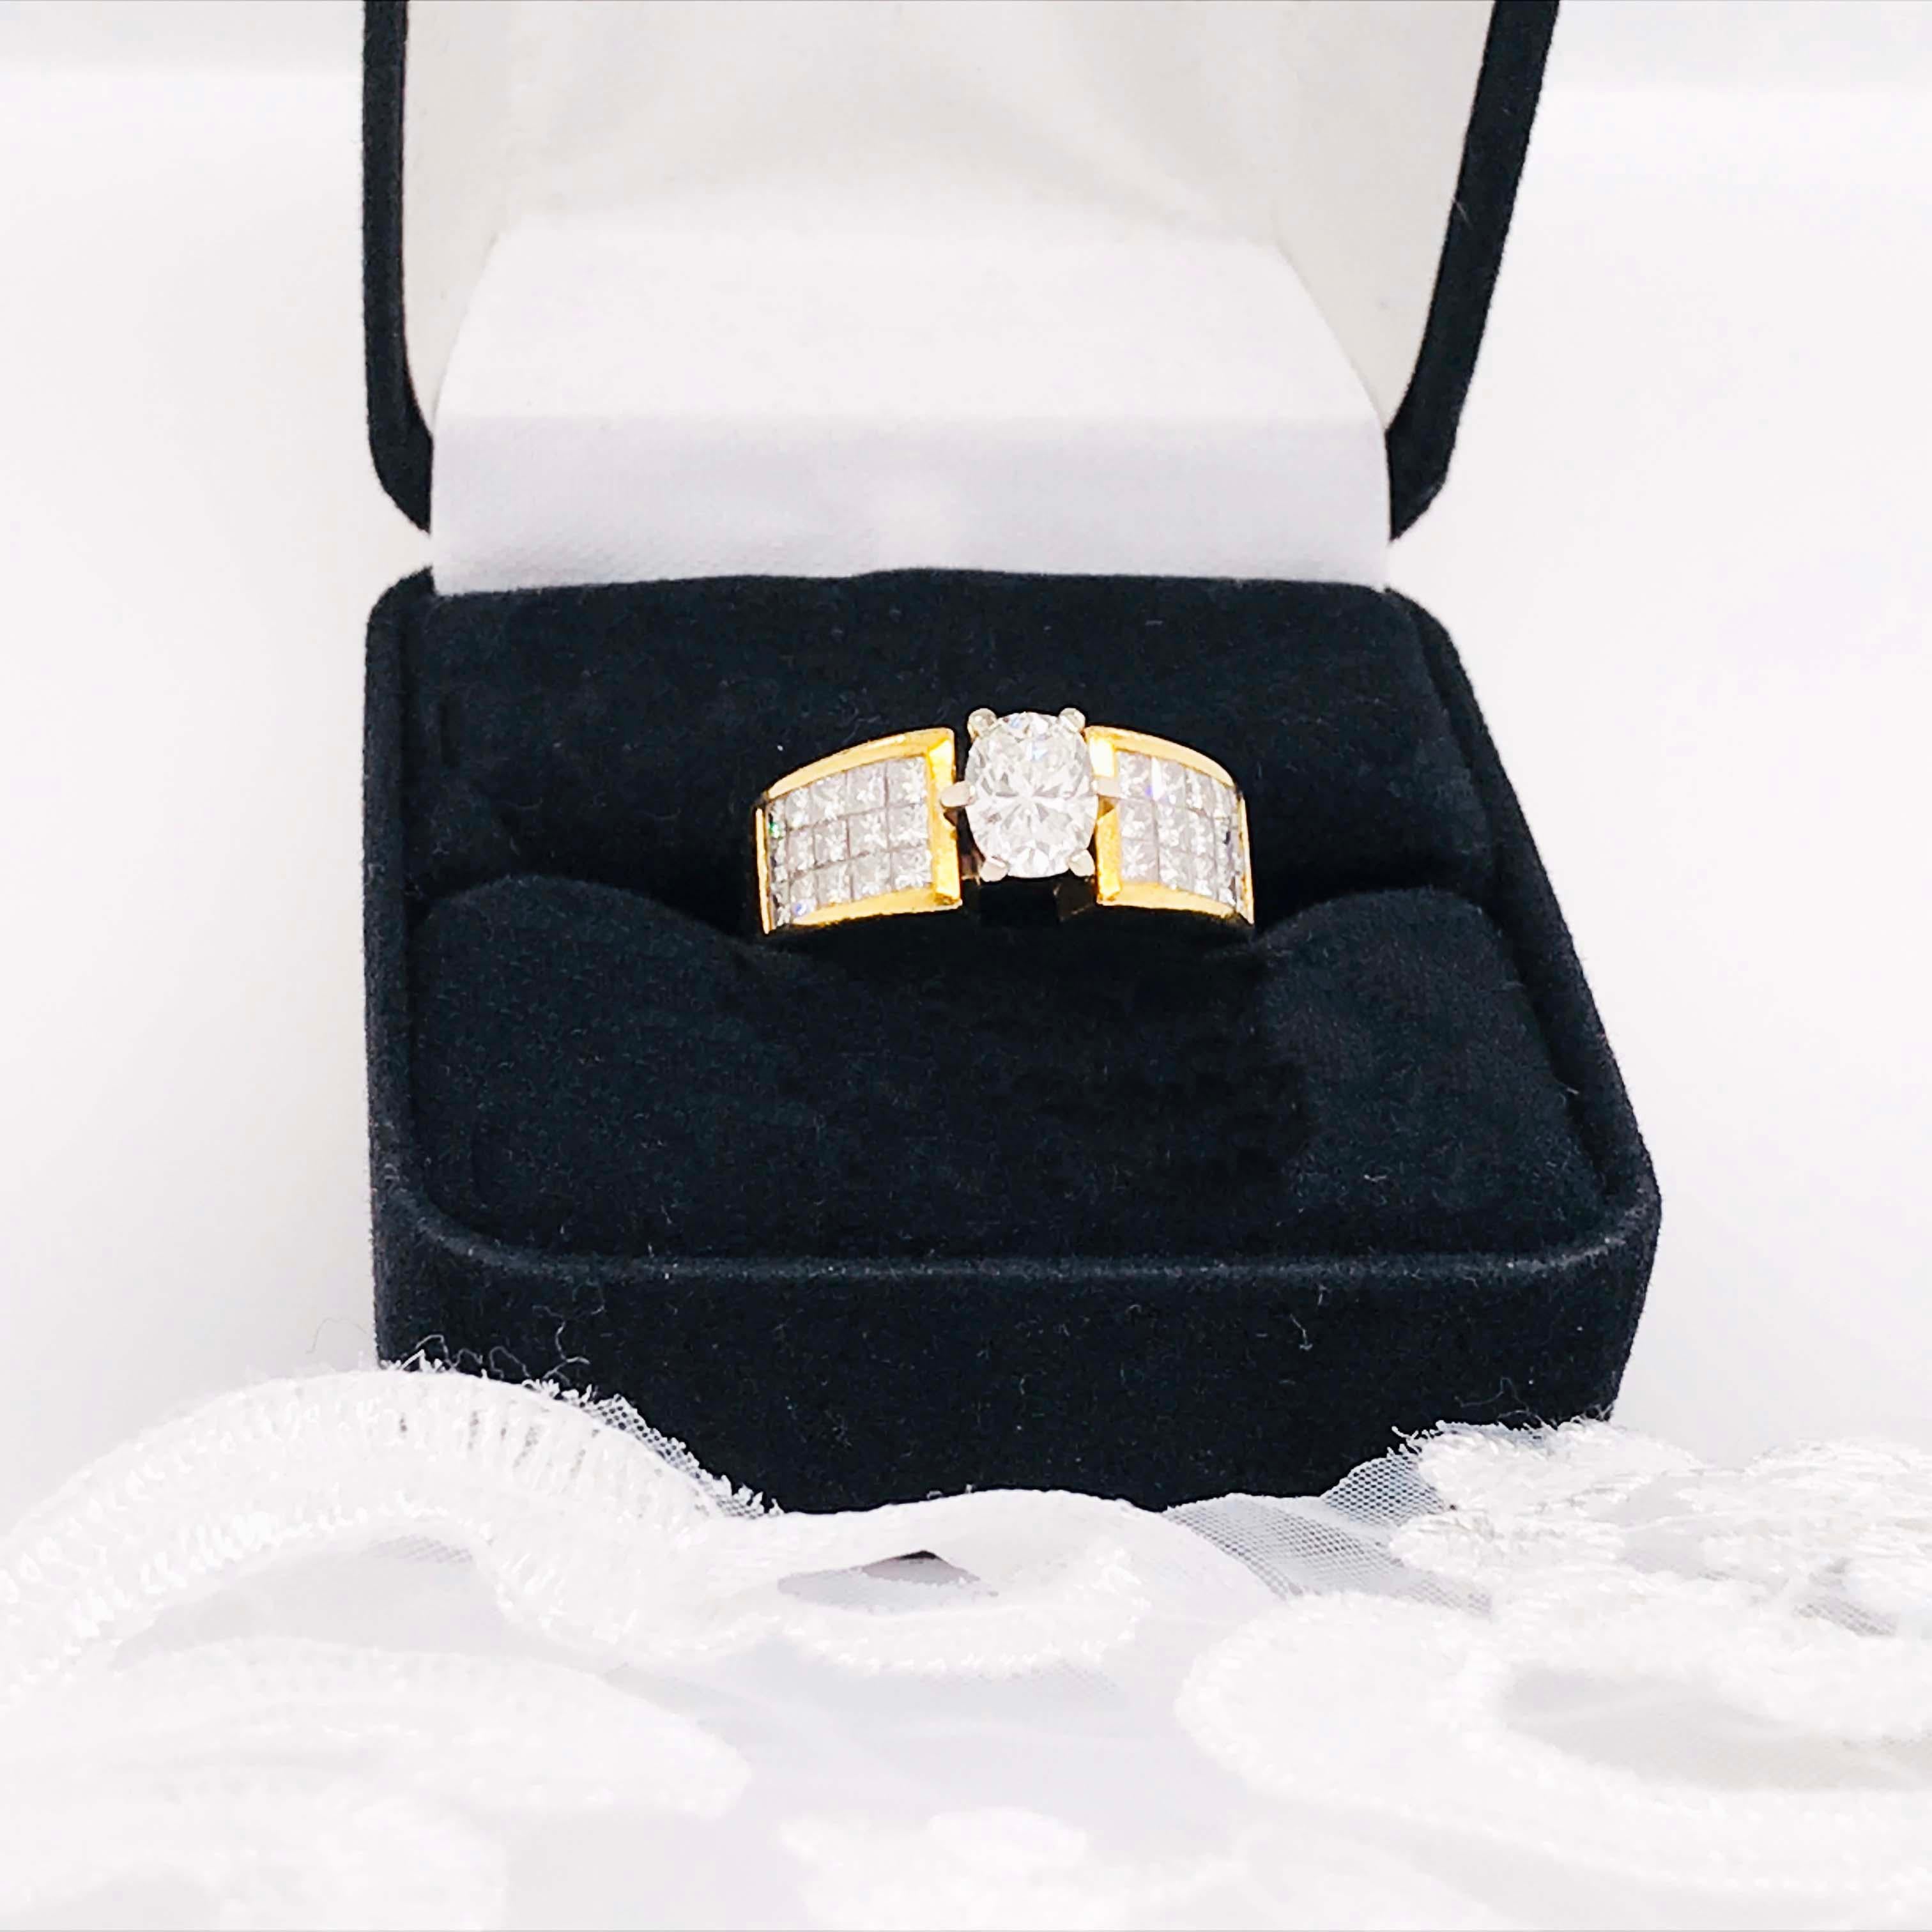 1.5 carat oval diamond ring gold band